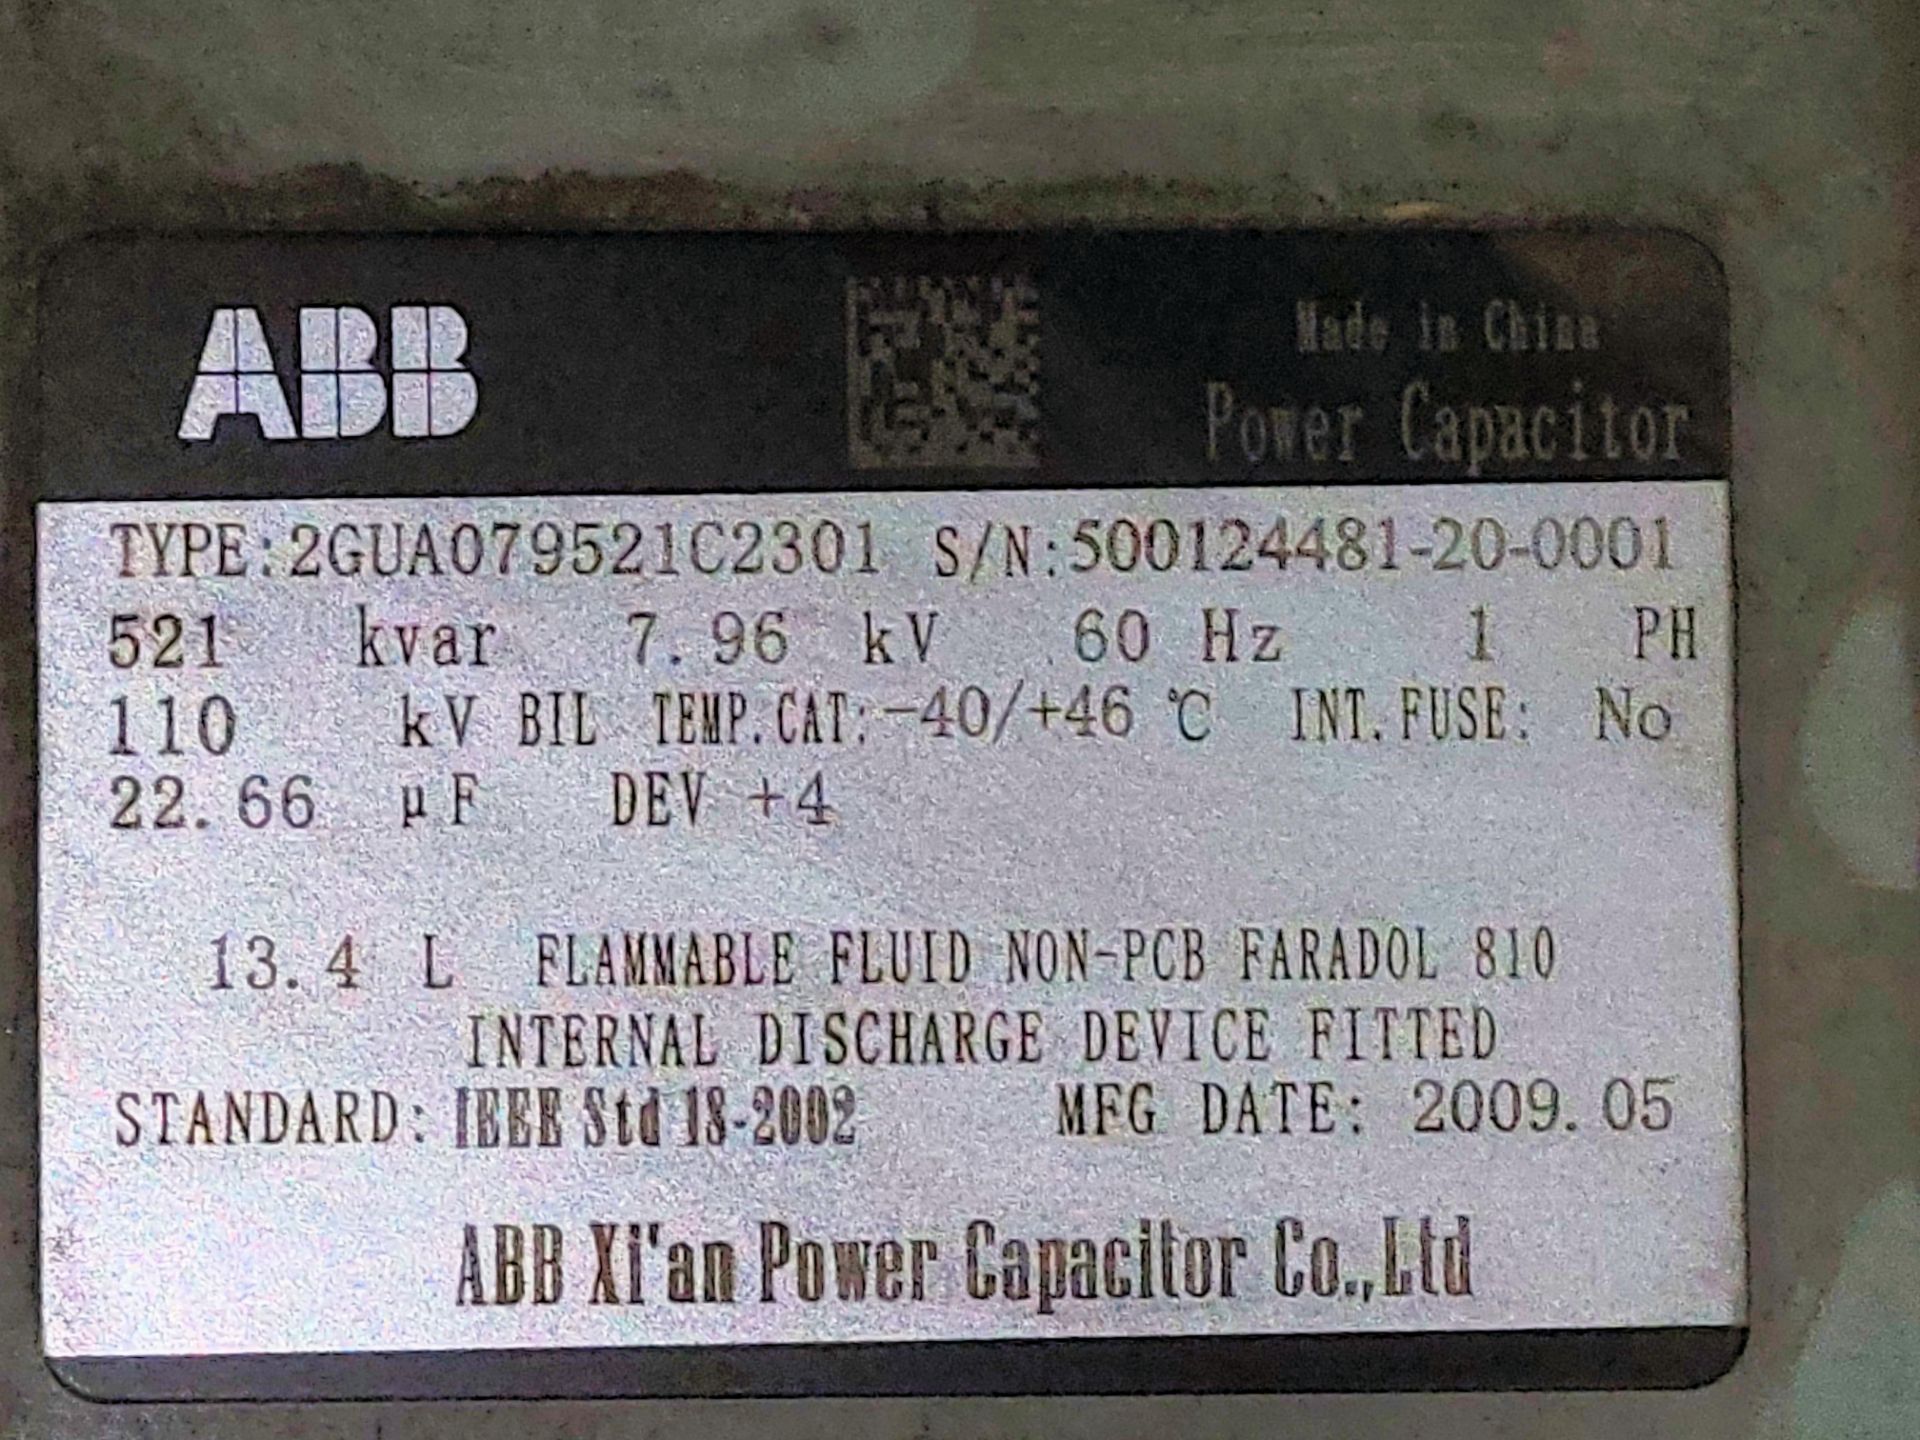 2009 ABB Type 2GUA079521C2301 521-KVAR, 7.96-KV, 110-KVBIL Power Capacitor, S/n 500124481-20-0001 - Image 2 of 2